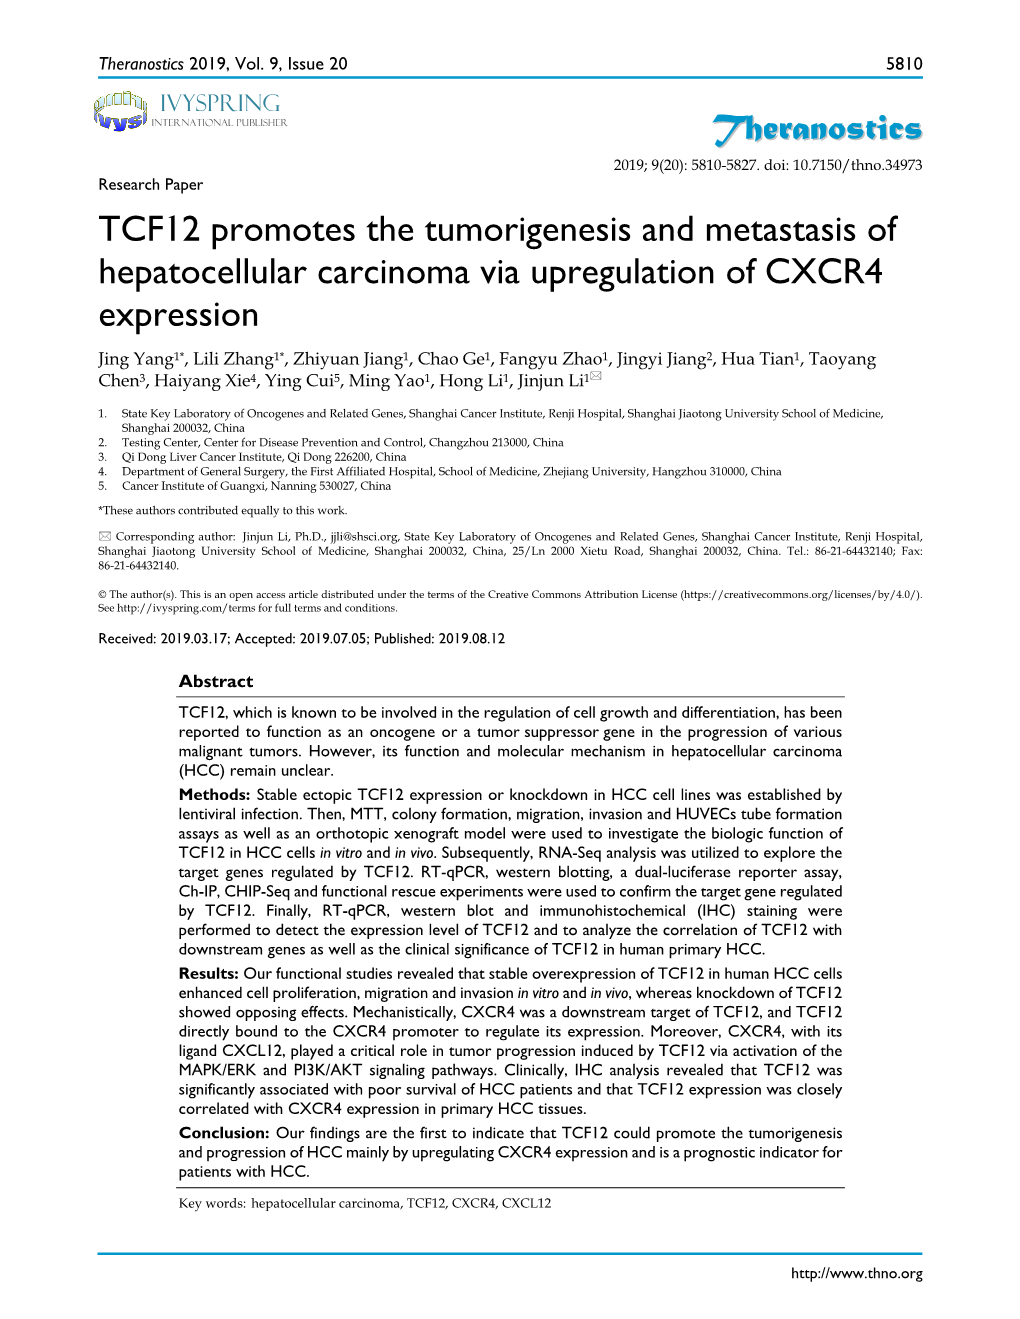 Theranostics TCF12 Promotes the Tumorigenesis and Metastasis of Hepatocellular Carcinoma Via Upregulation of CXCR4 Expression